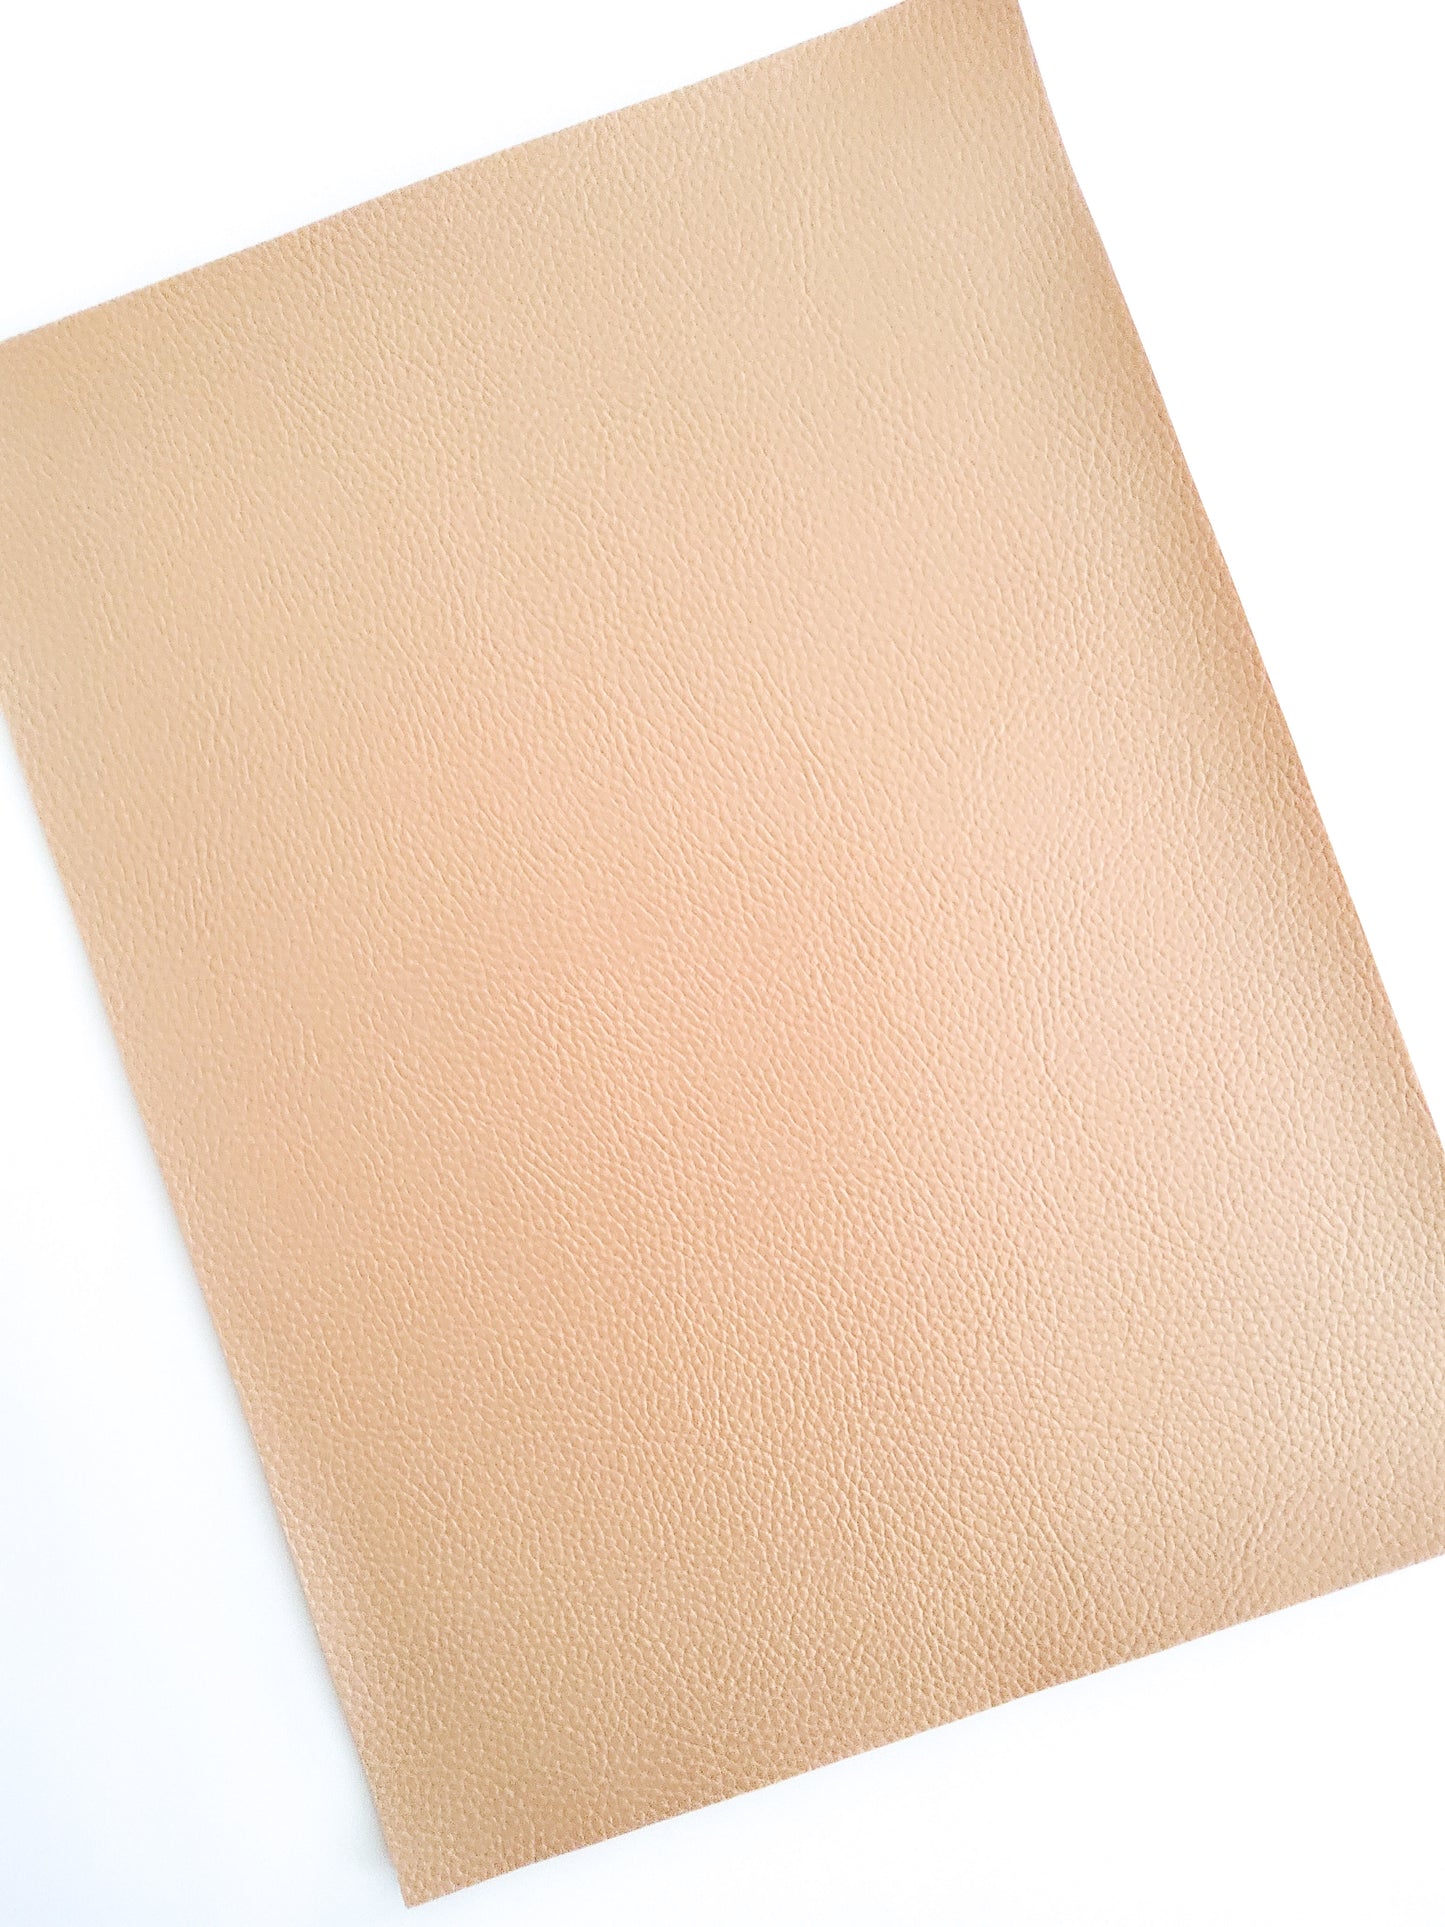 Tan Pebbled 9x12 faux leather sheet